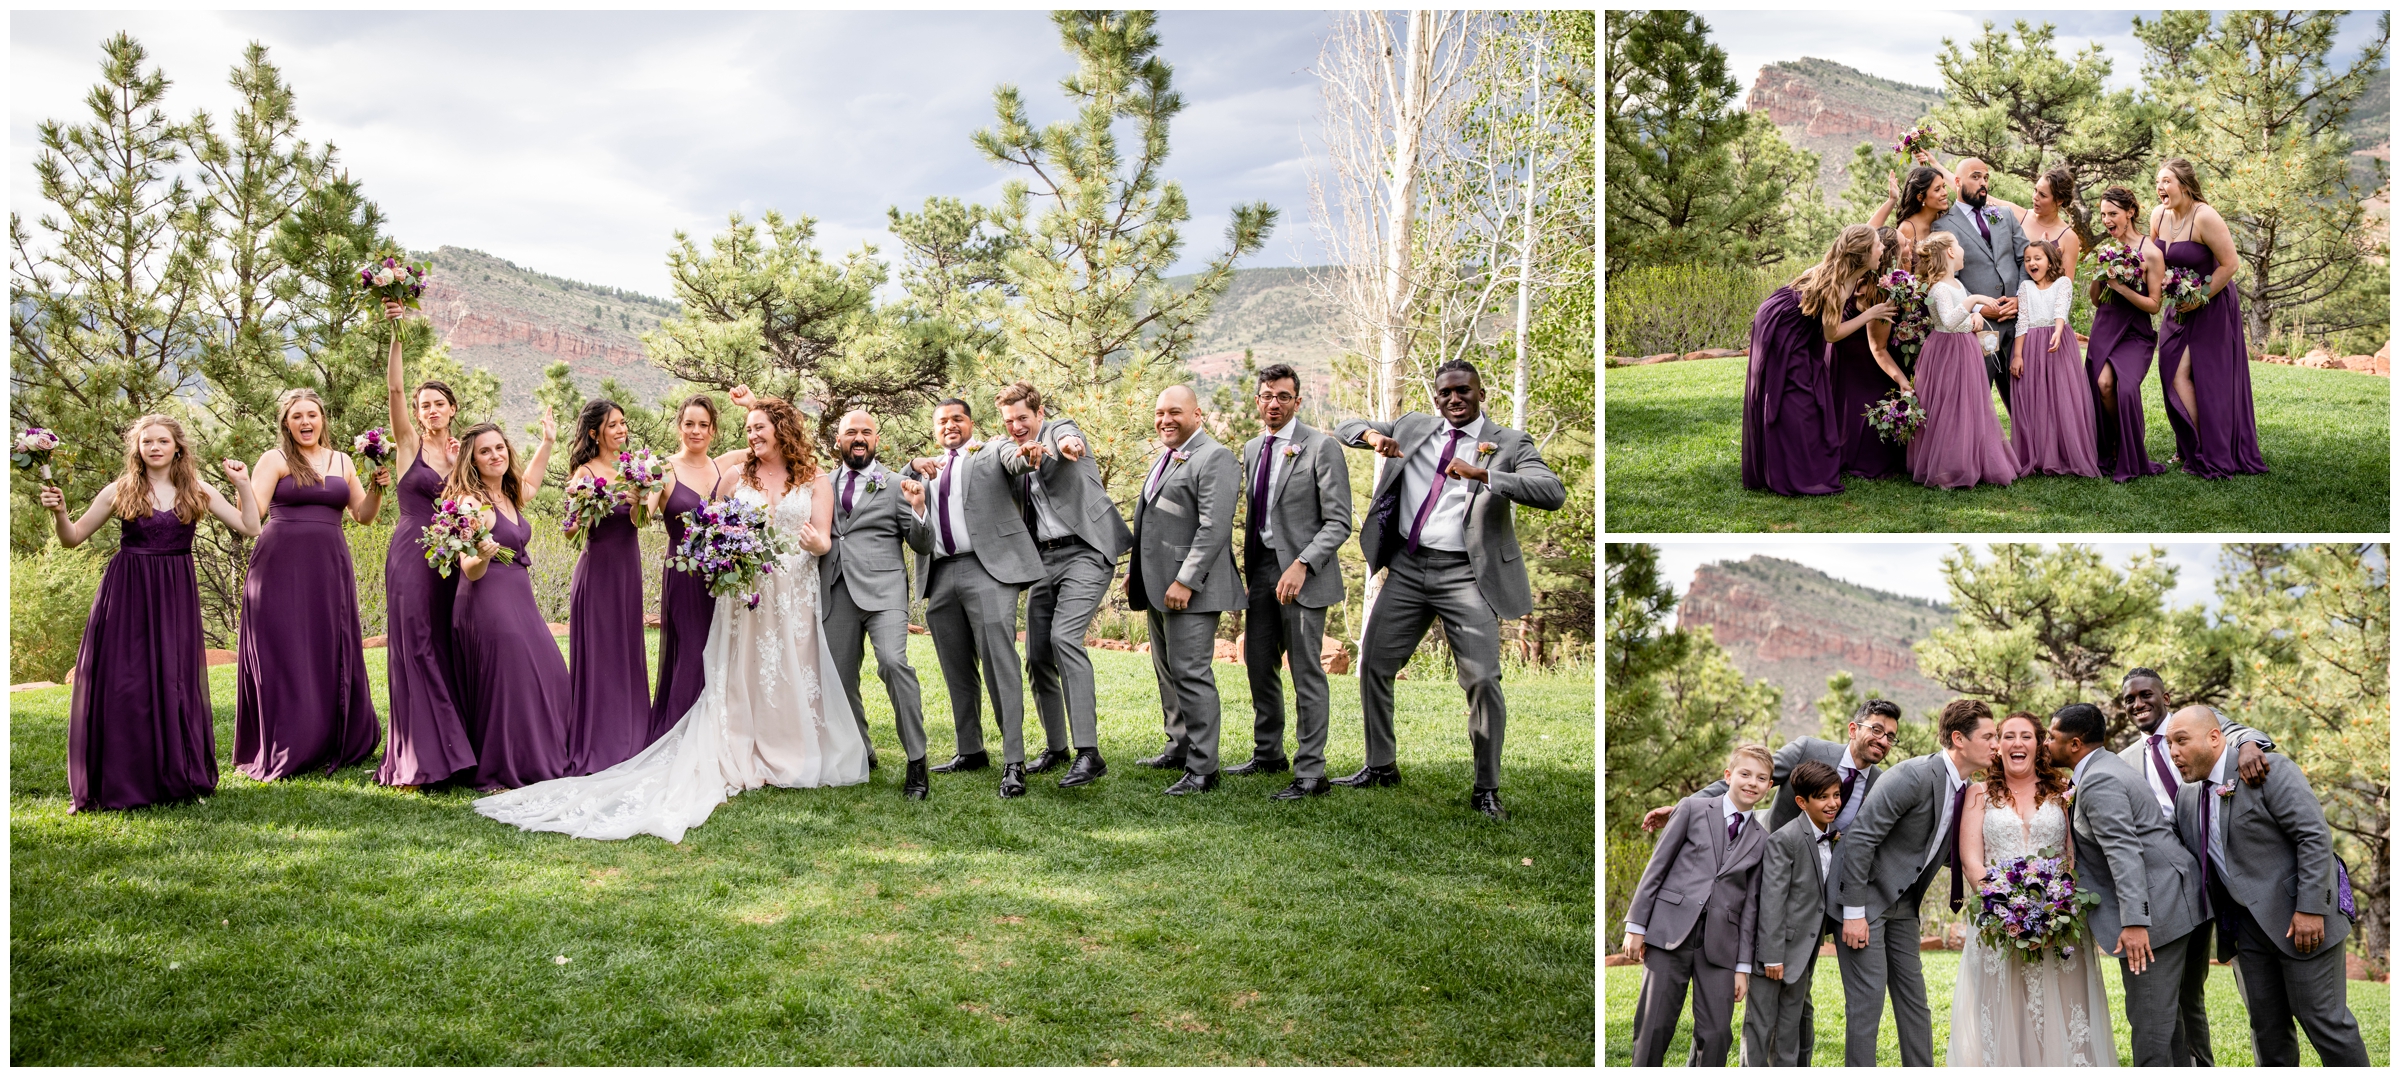 fun bridal party photos at spring Colorado wedding in Lyons